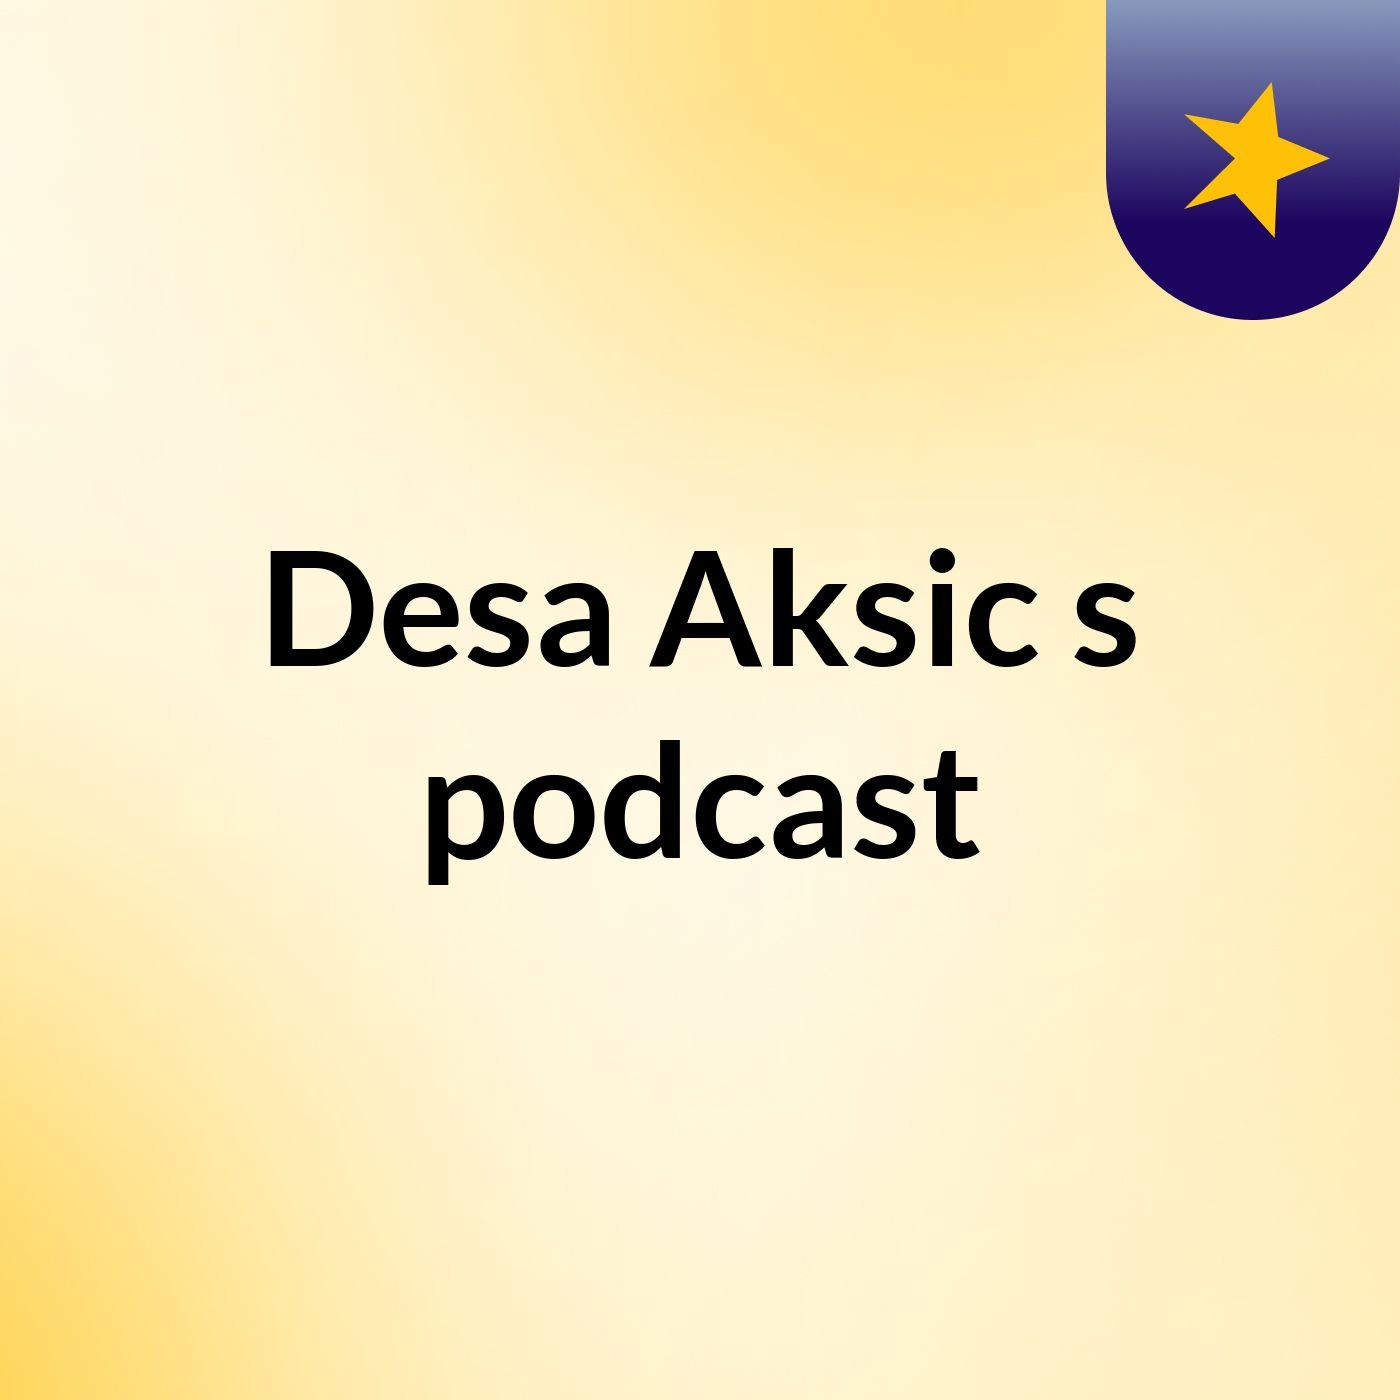 Desa Aksic's podcast